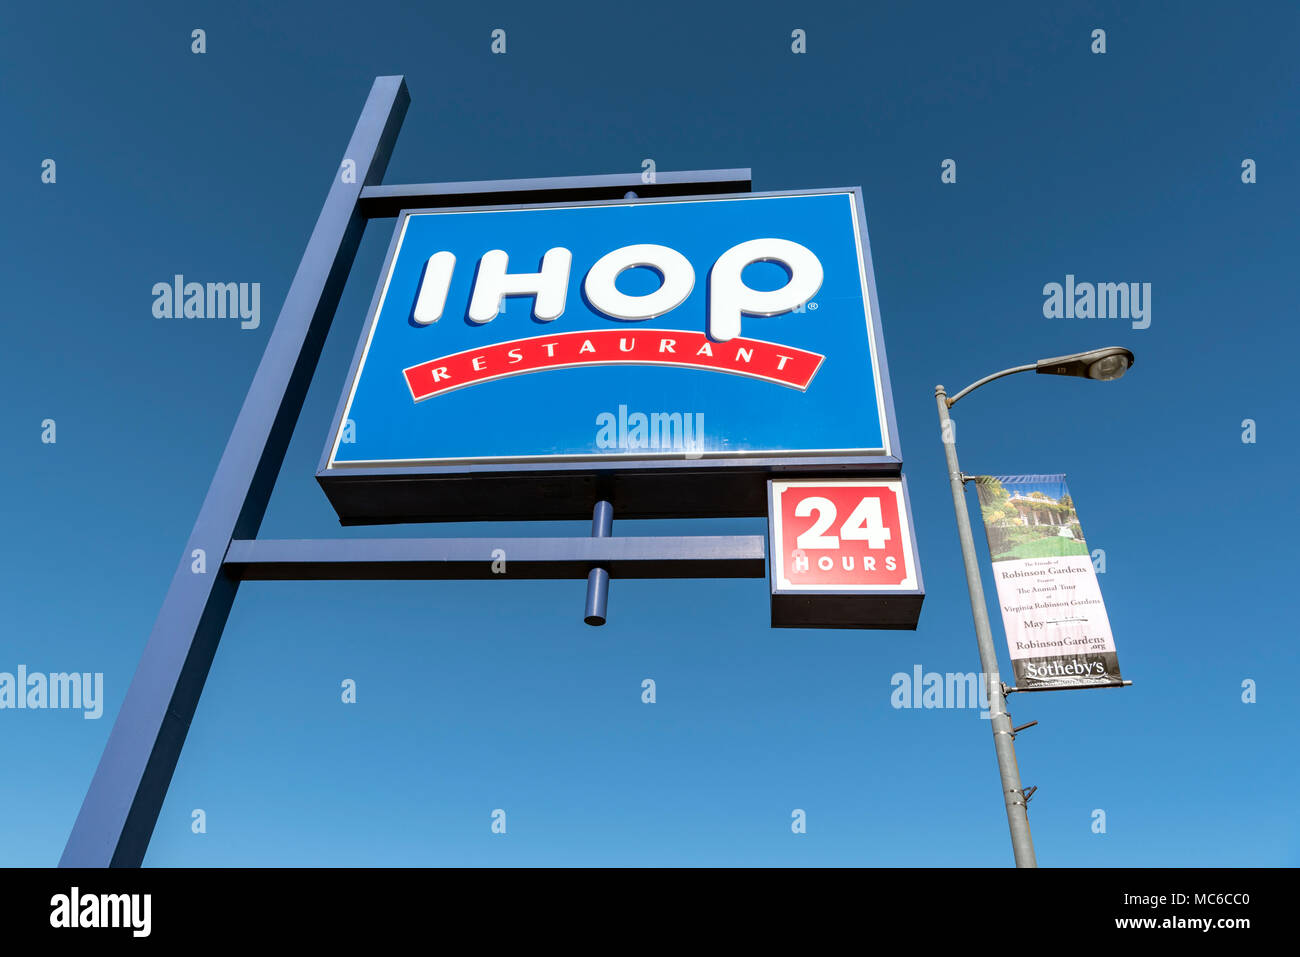 iHop restaurant sign, Los Angeles Stock Photo